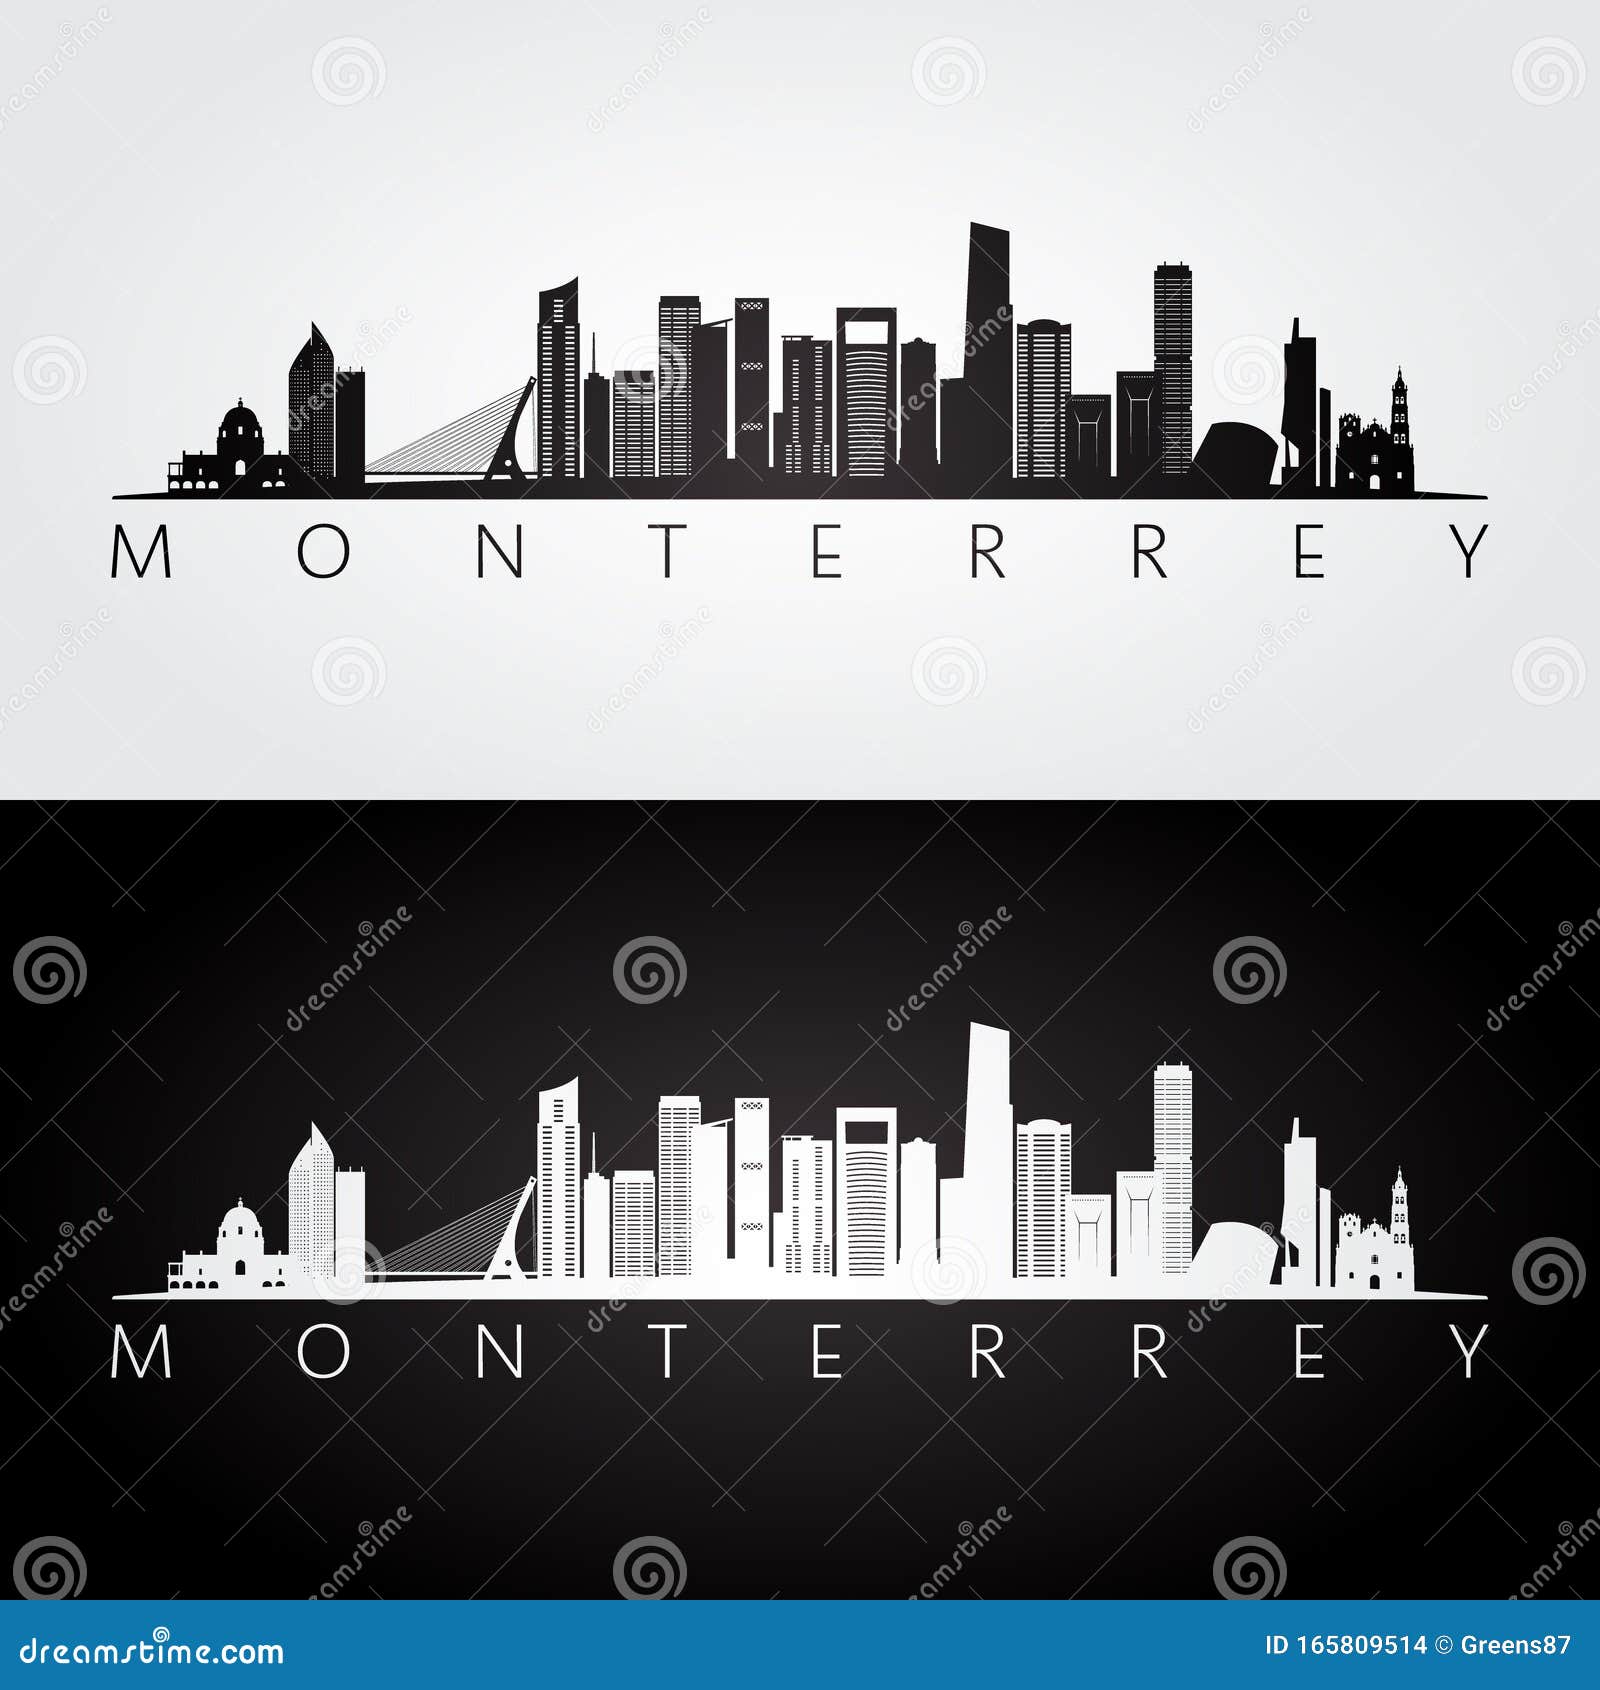 monterrey skyline and landmarks silhouette